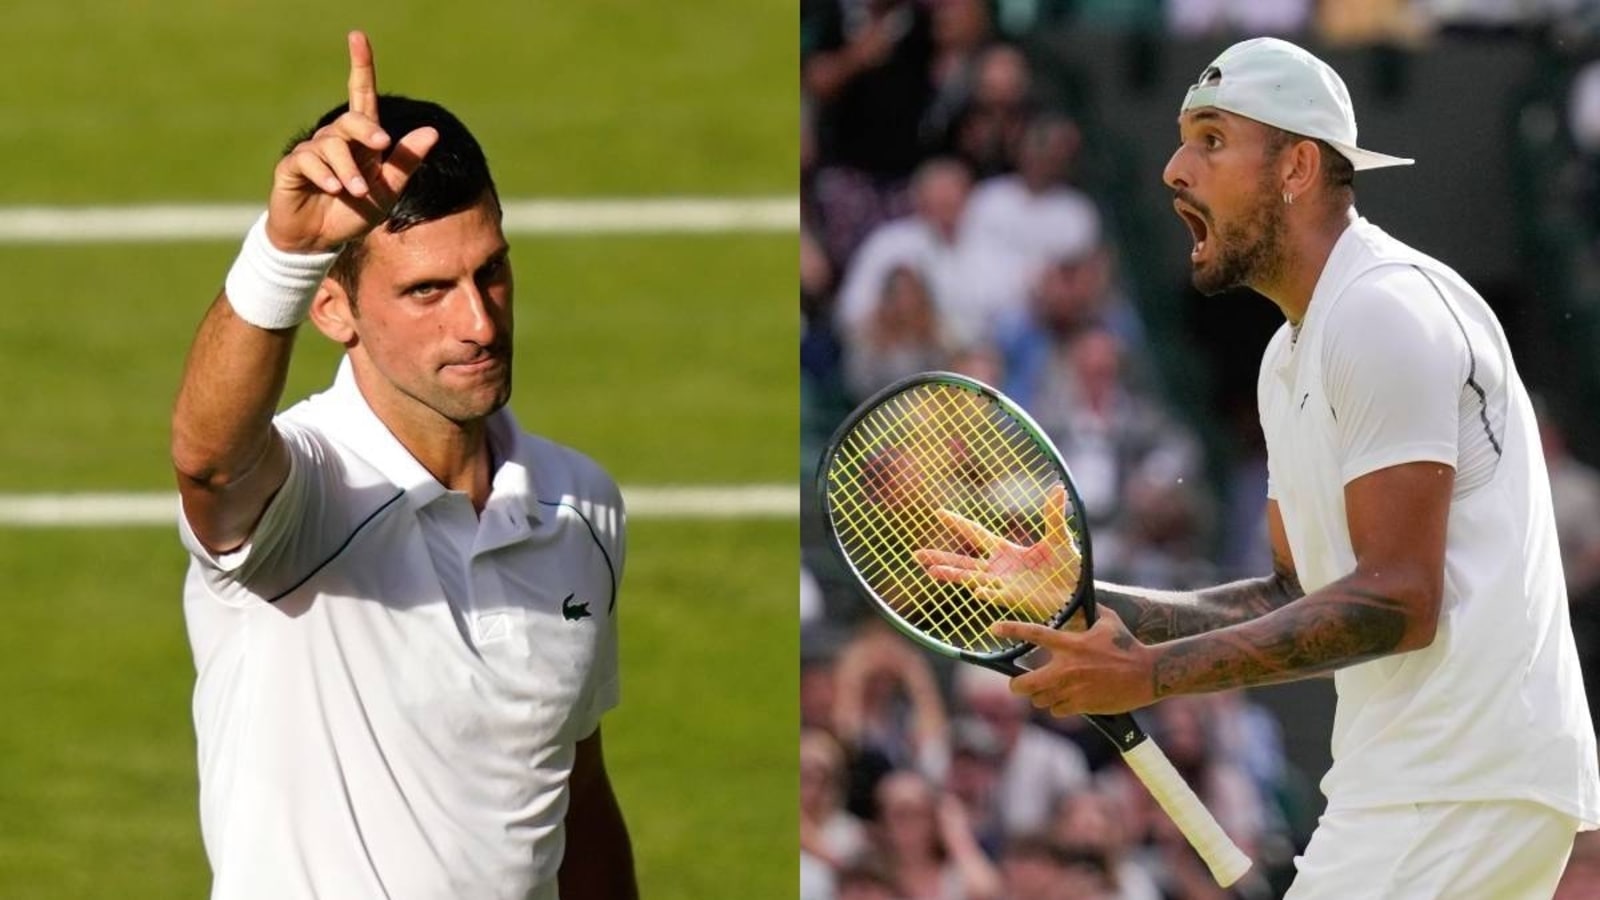 Wimbledon final Djokovic vs Kyrgios H2H tie, key stats - All you need to know Tennis News